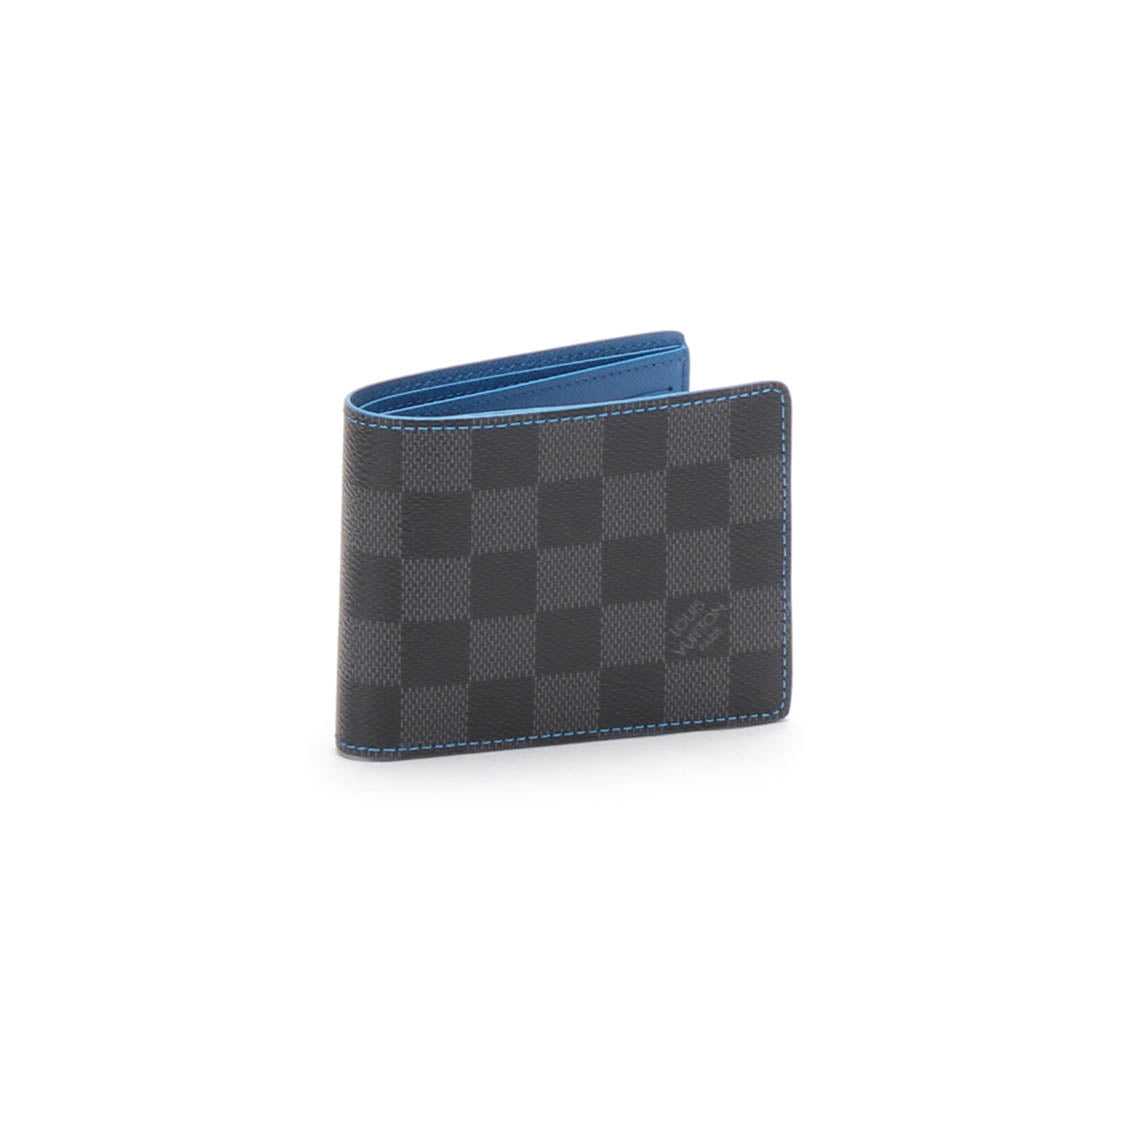 Buy Louis Vuitton Damier Graphite Canvas Blue Slender Wallet N64033 at